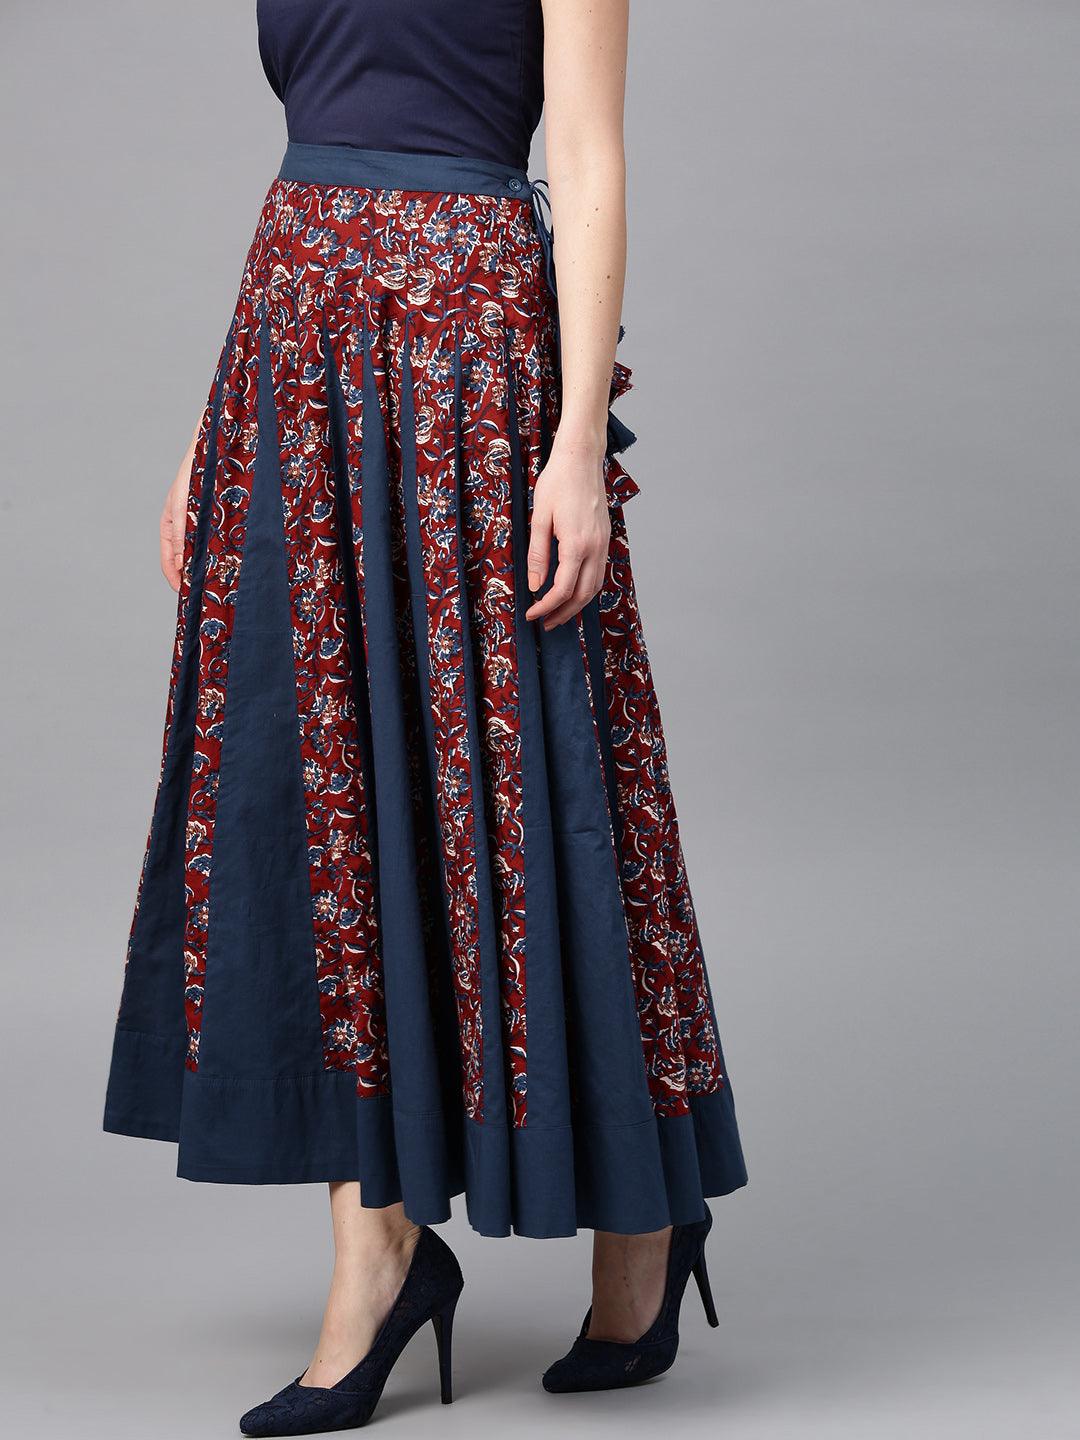 Blue &amp; Burgundy Printed Flared Skirt - Znxclothing